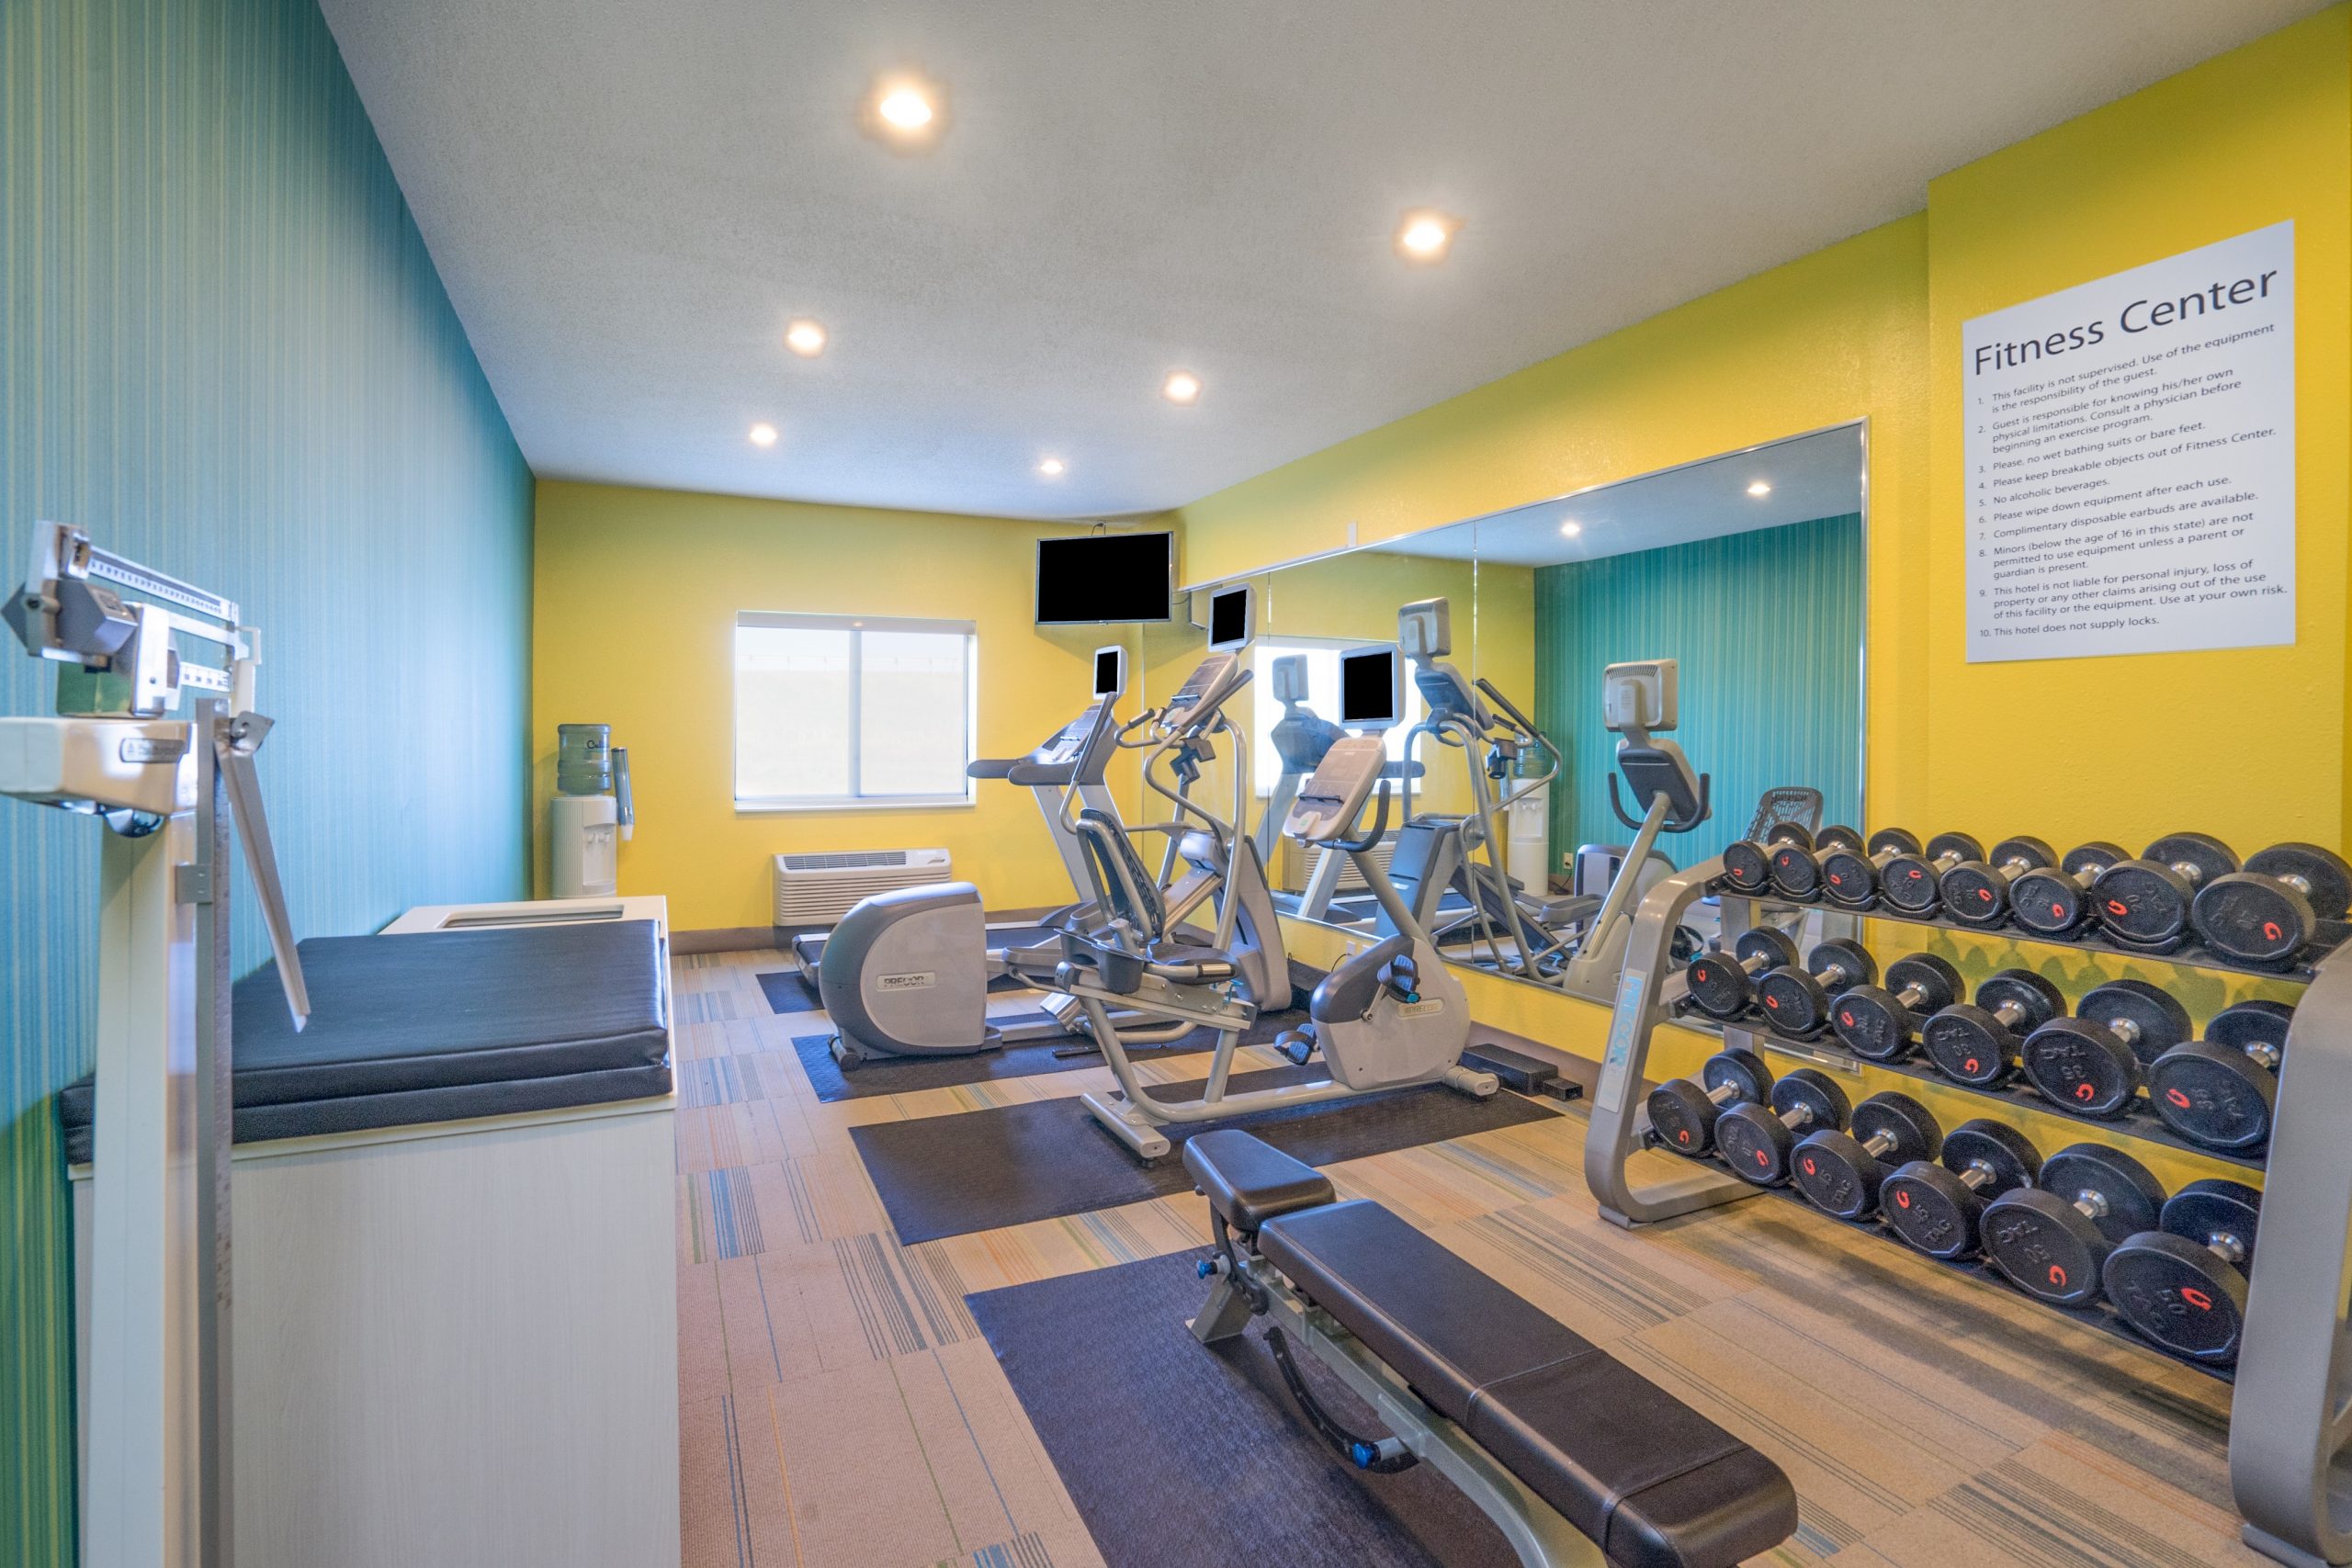 Holiday Inn Express fitness room